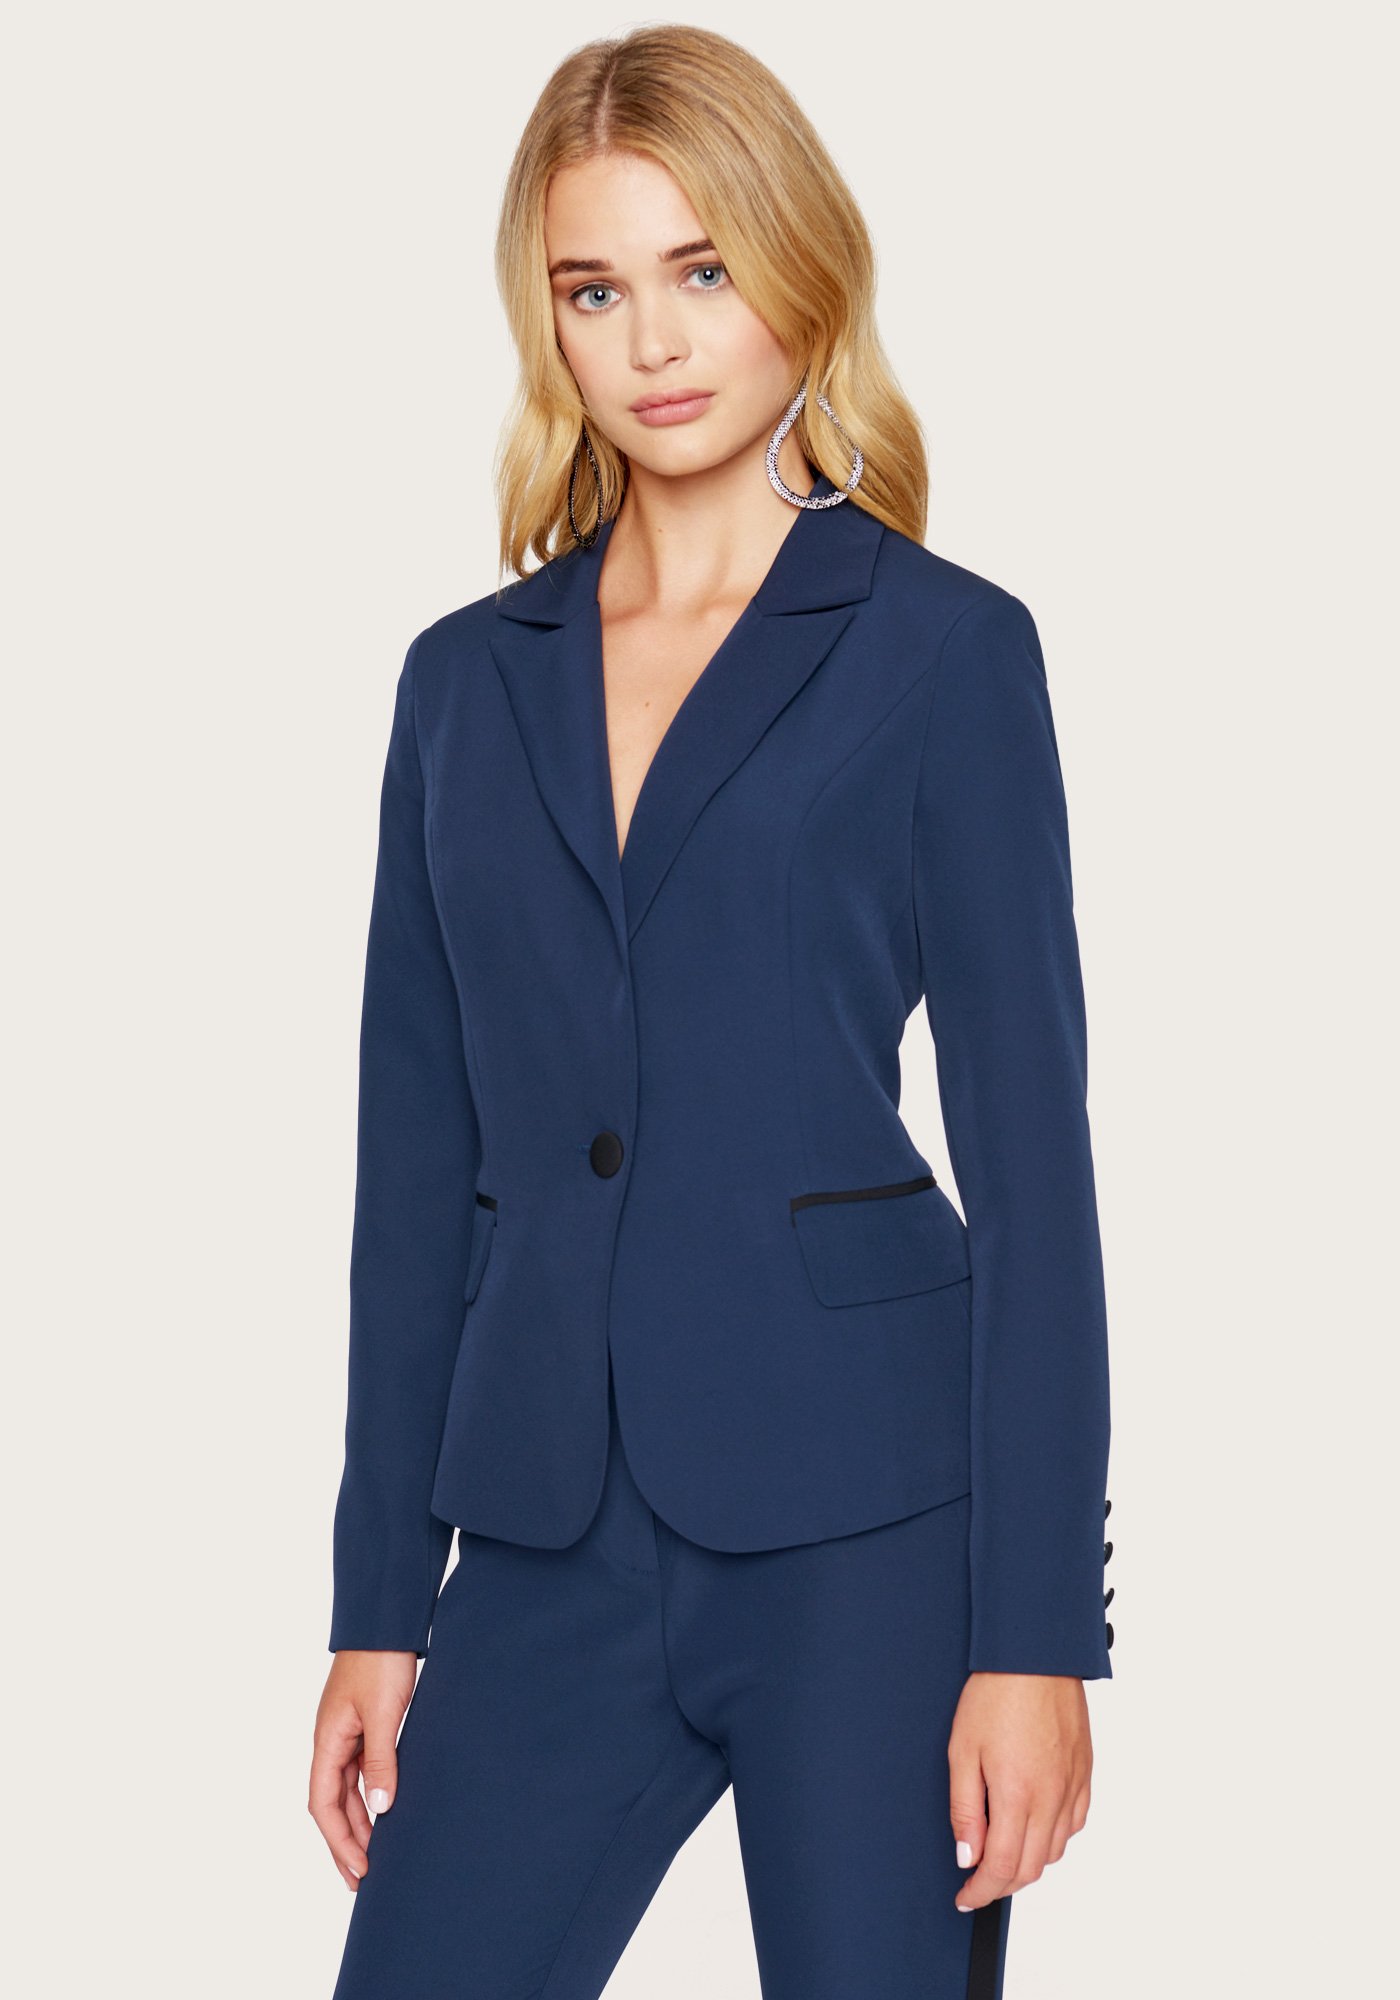 Bebe Women's Slim Fitted Blazer Jacket, Size 4 in Peacoat Spandex